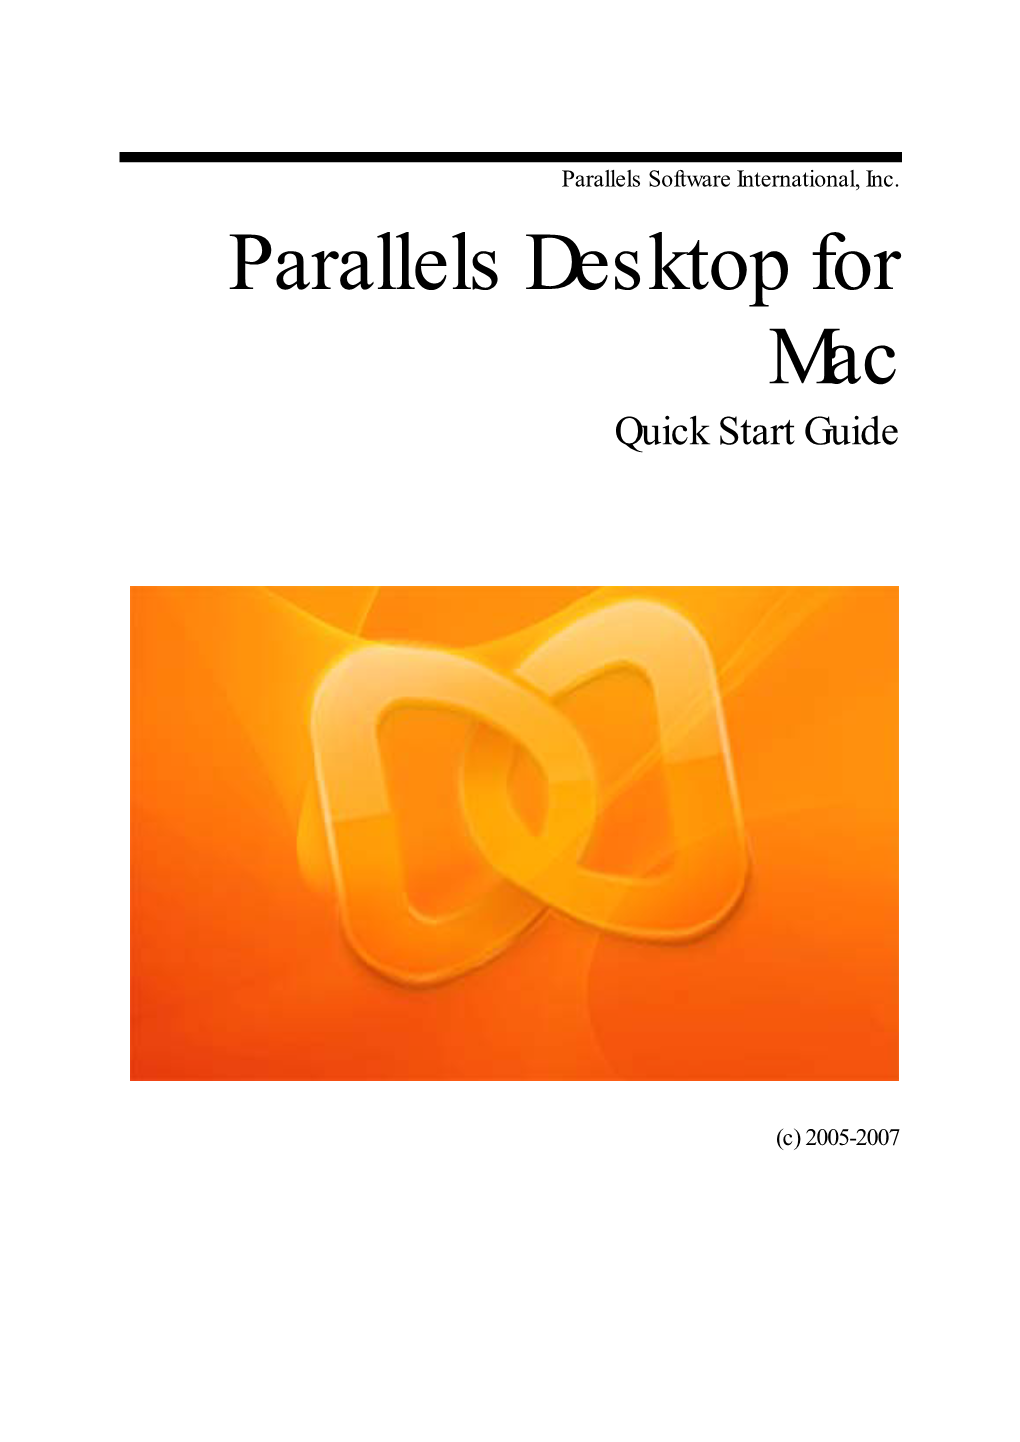 Parallels Desktop for Mac Quick Start Guide